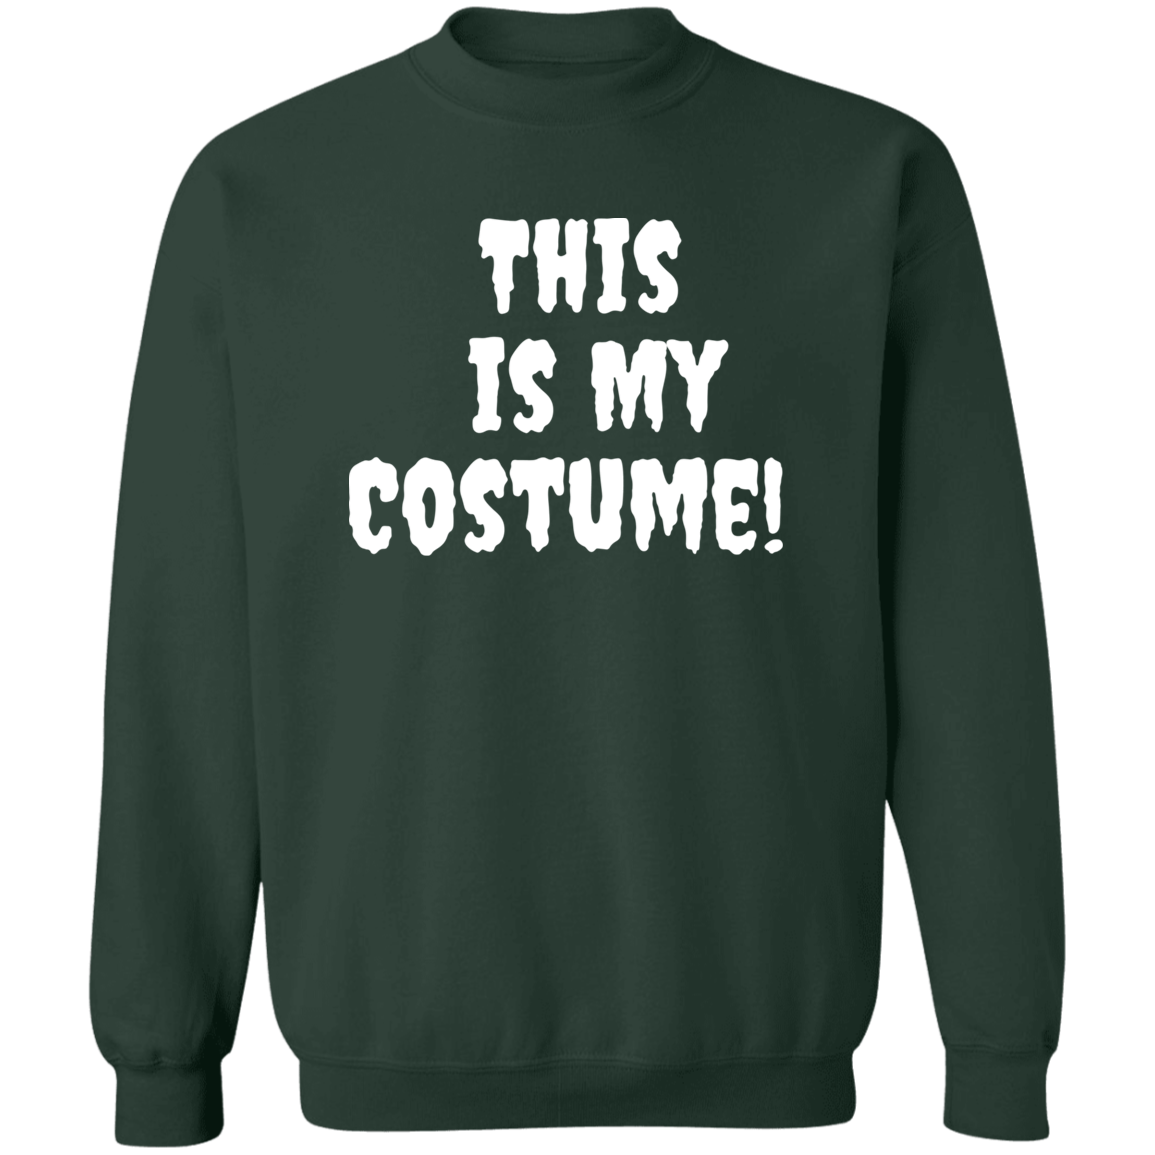 This Is My Costume! Pullover Crewneck Sweatshirt